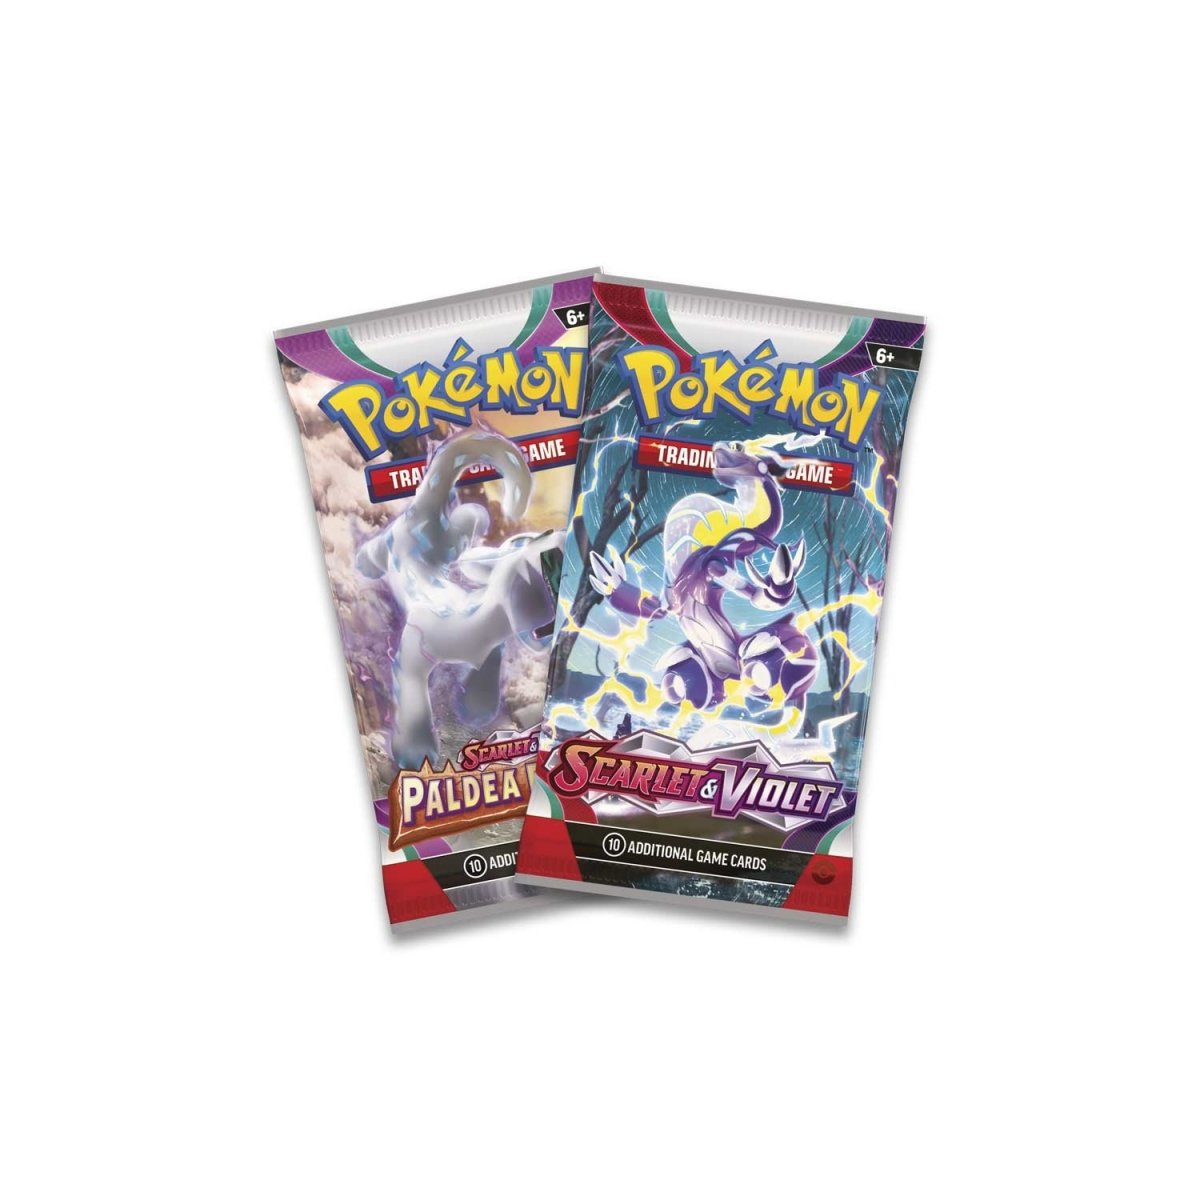 Pokémon TCG: 2 Booster Packs & Smoliv Eraser